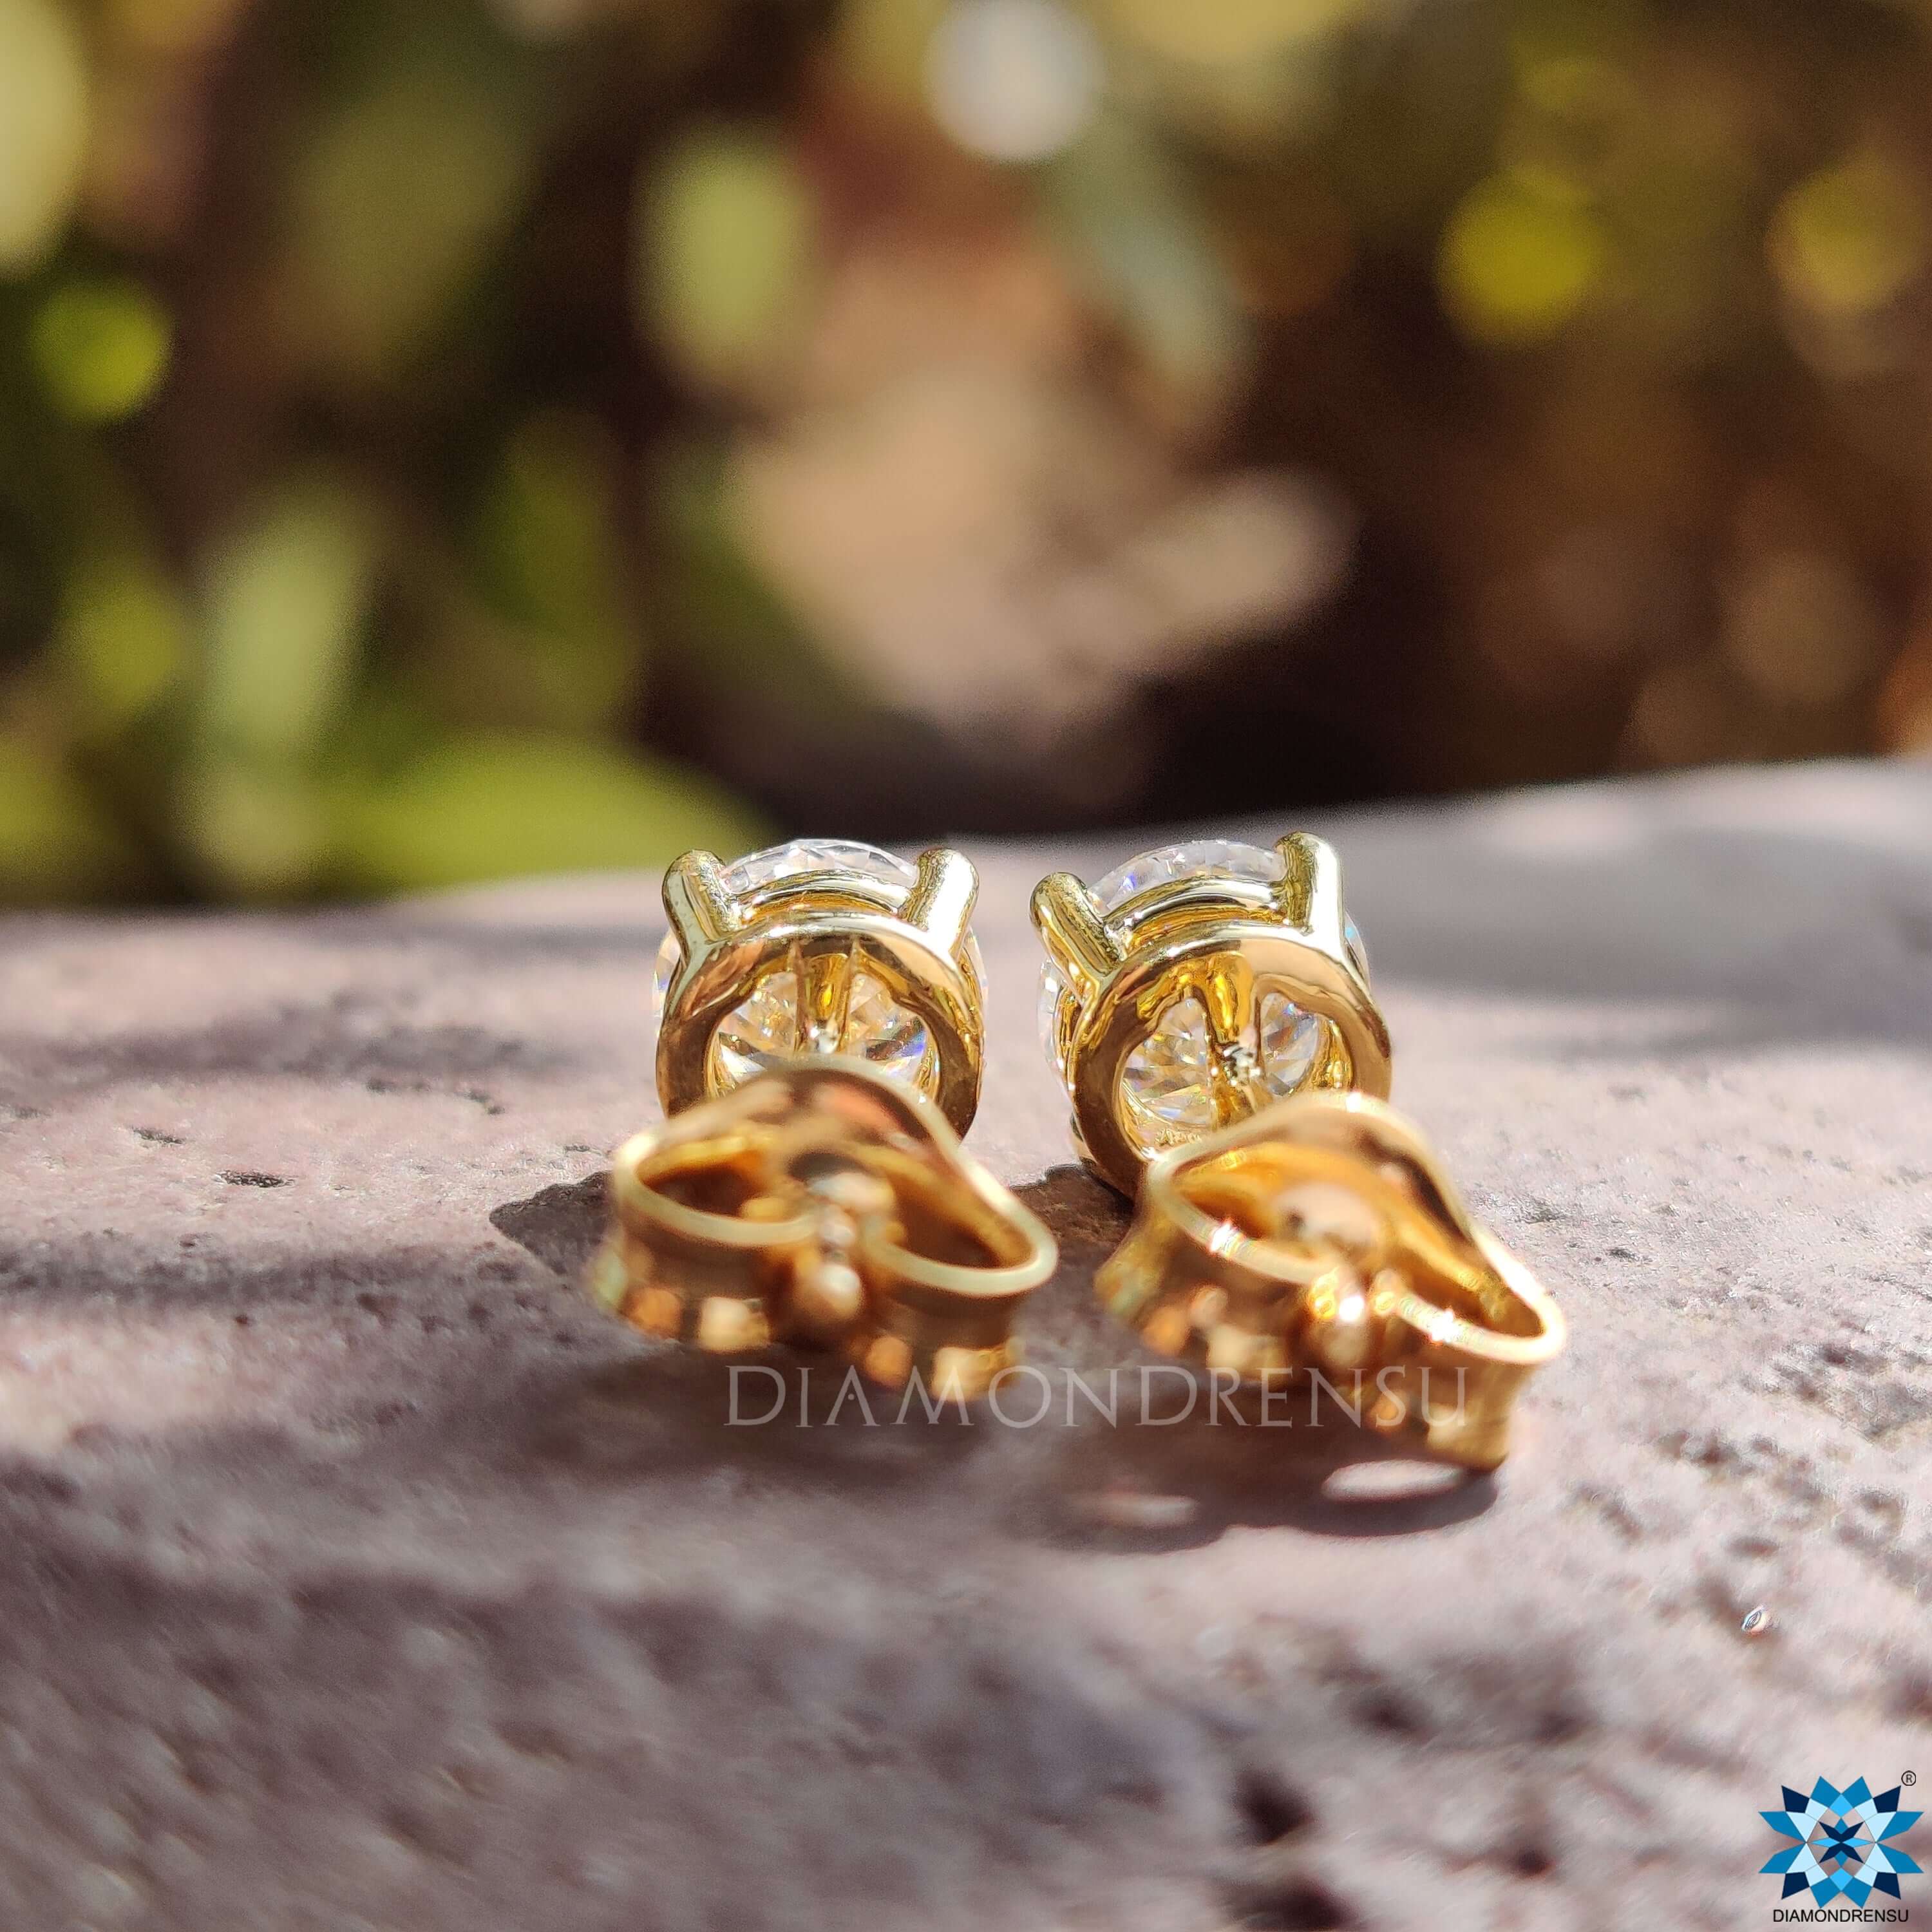 yellow gold earrings - diamondrensu